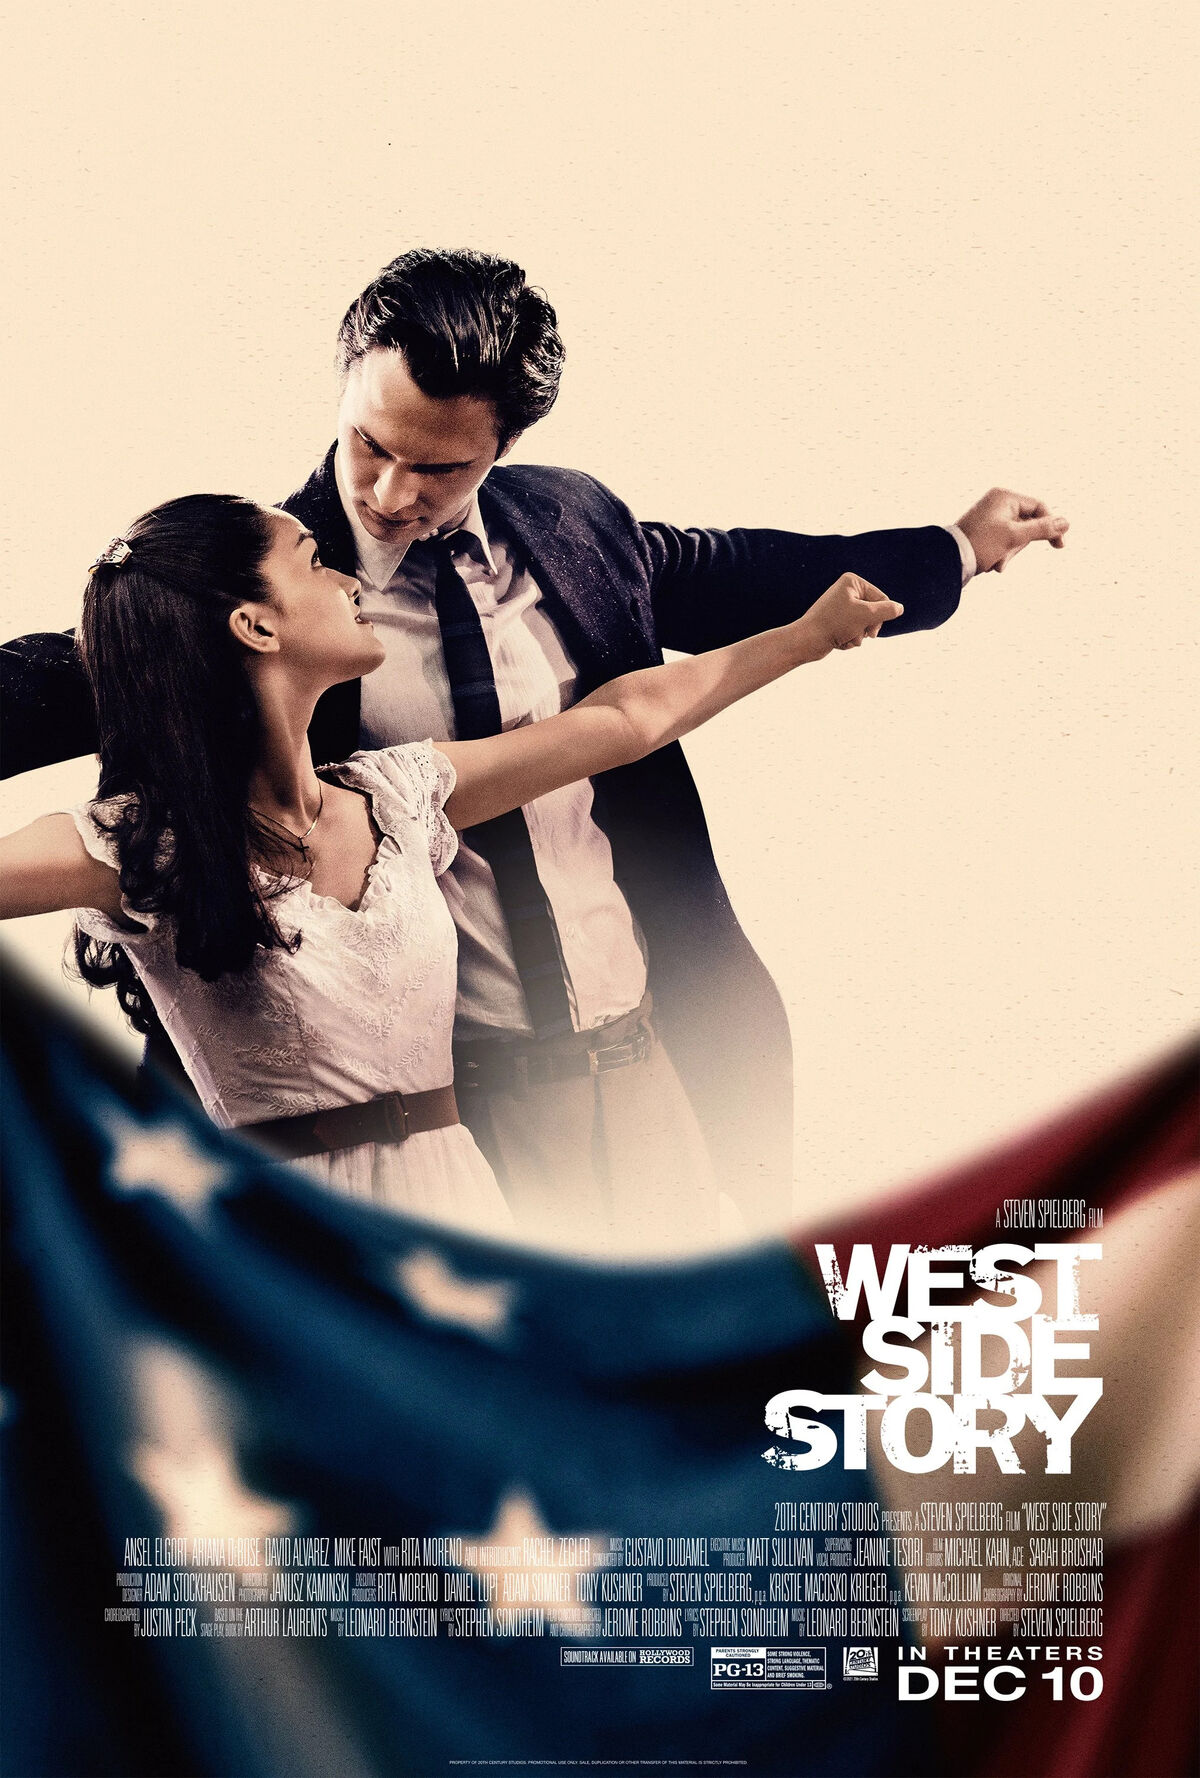 Wings - West Side Story